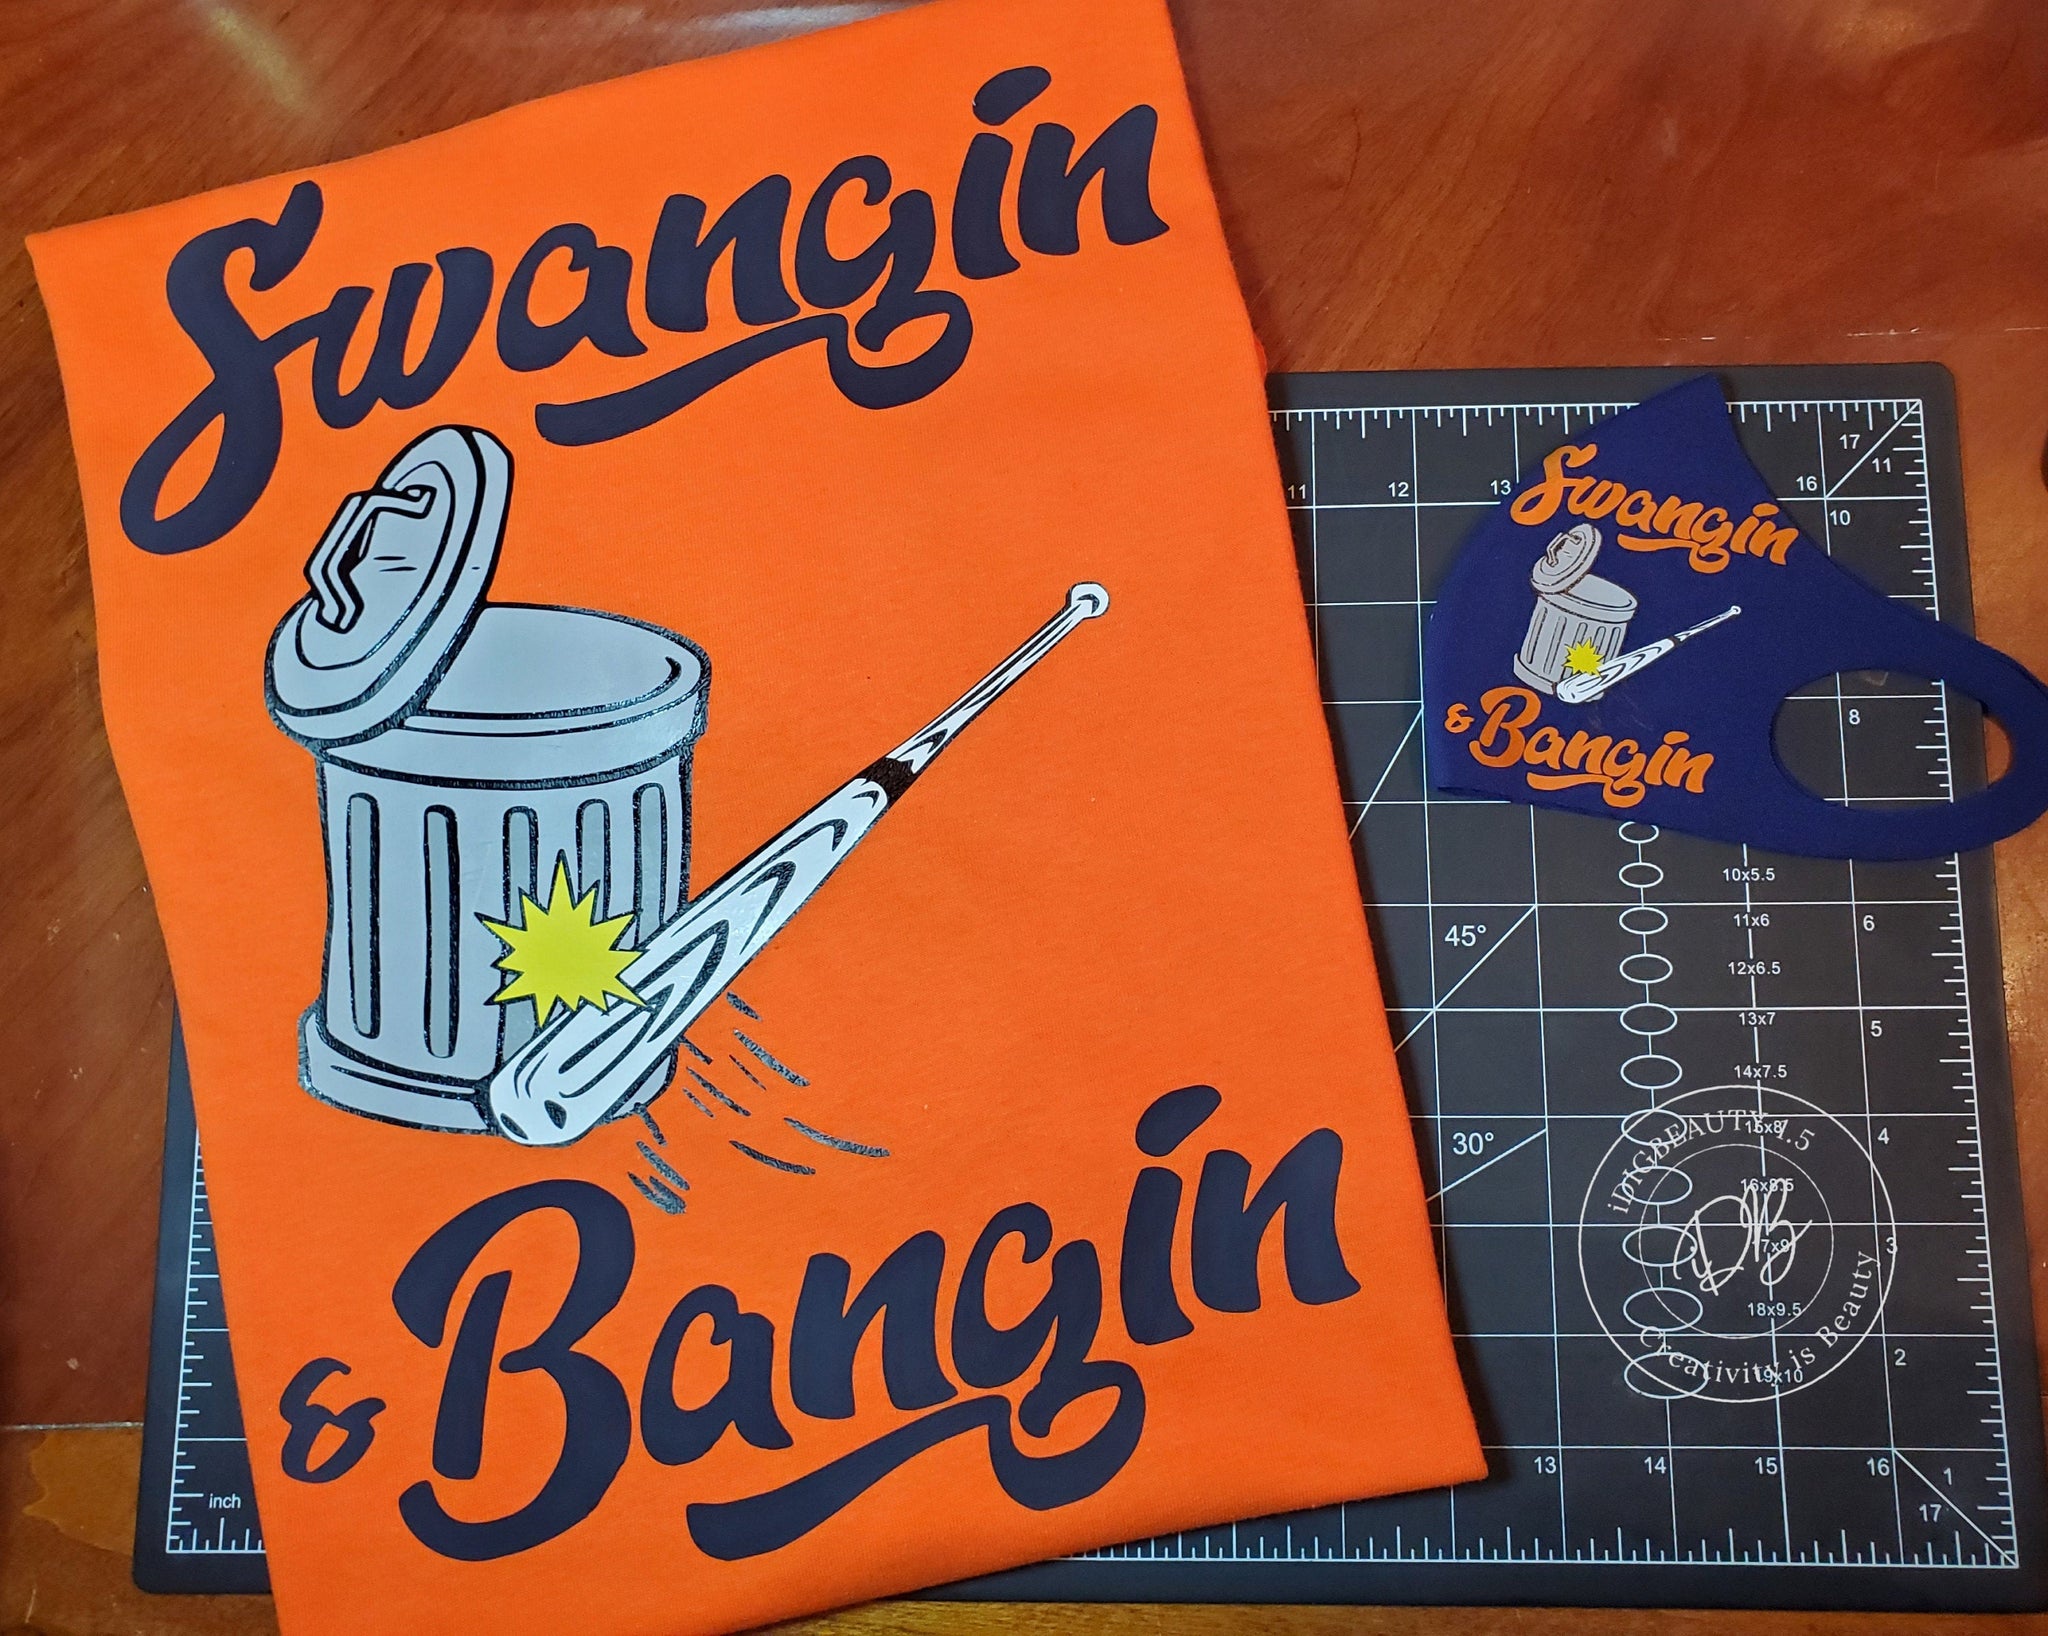 Houston Swangin And Bangin Houston Baseball Sign Stealing Meme Essential T- Shirt for Sale by ravishdesigns